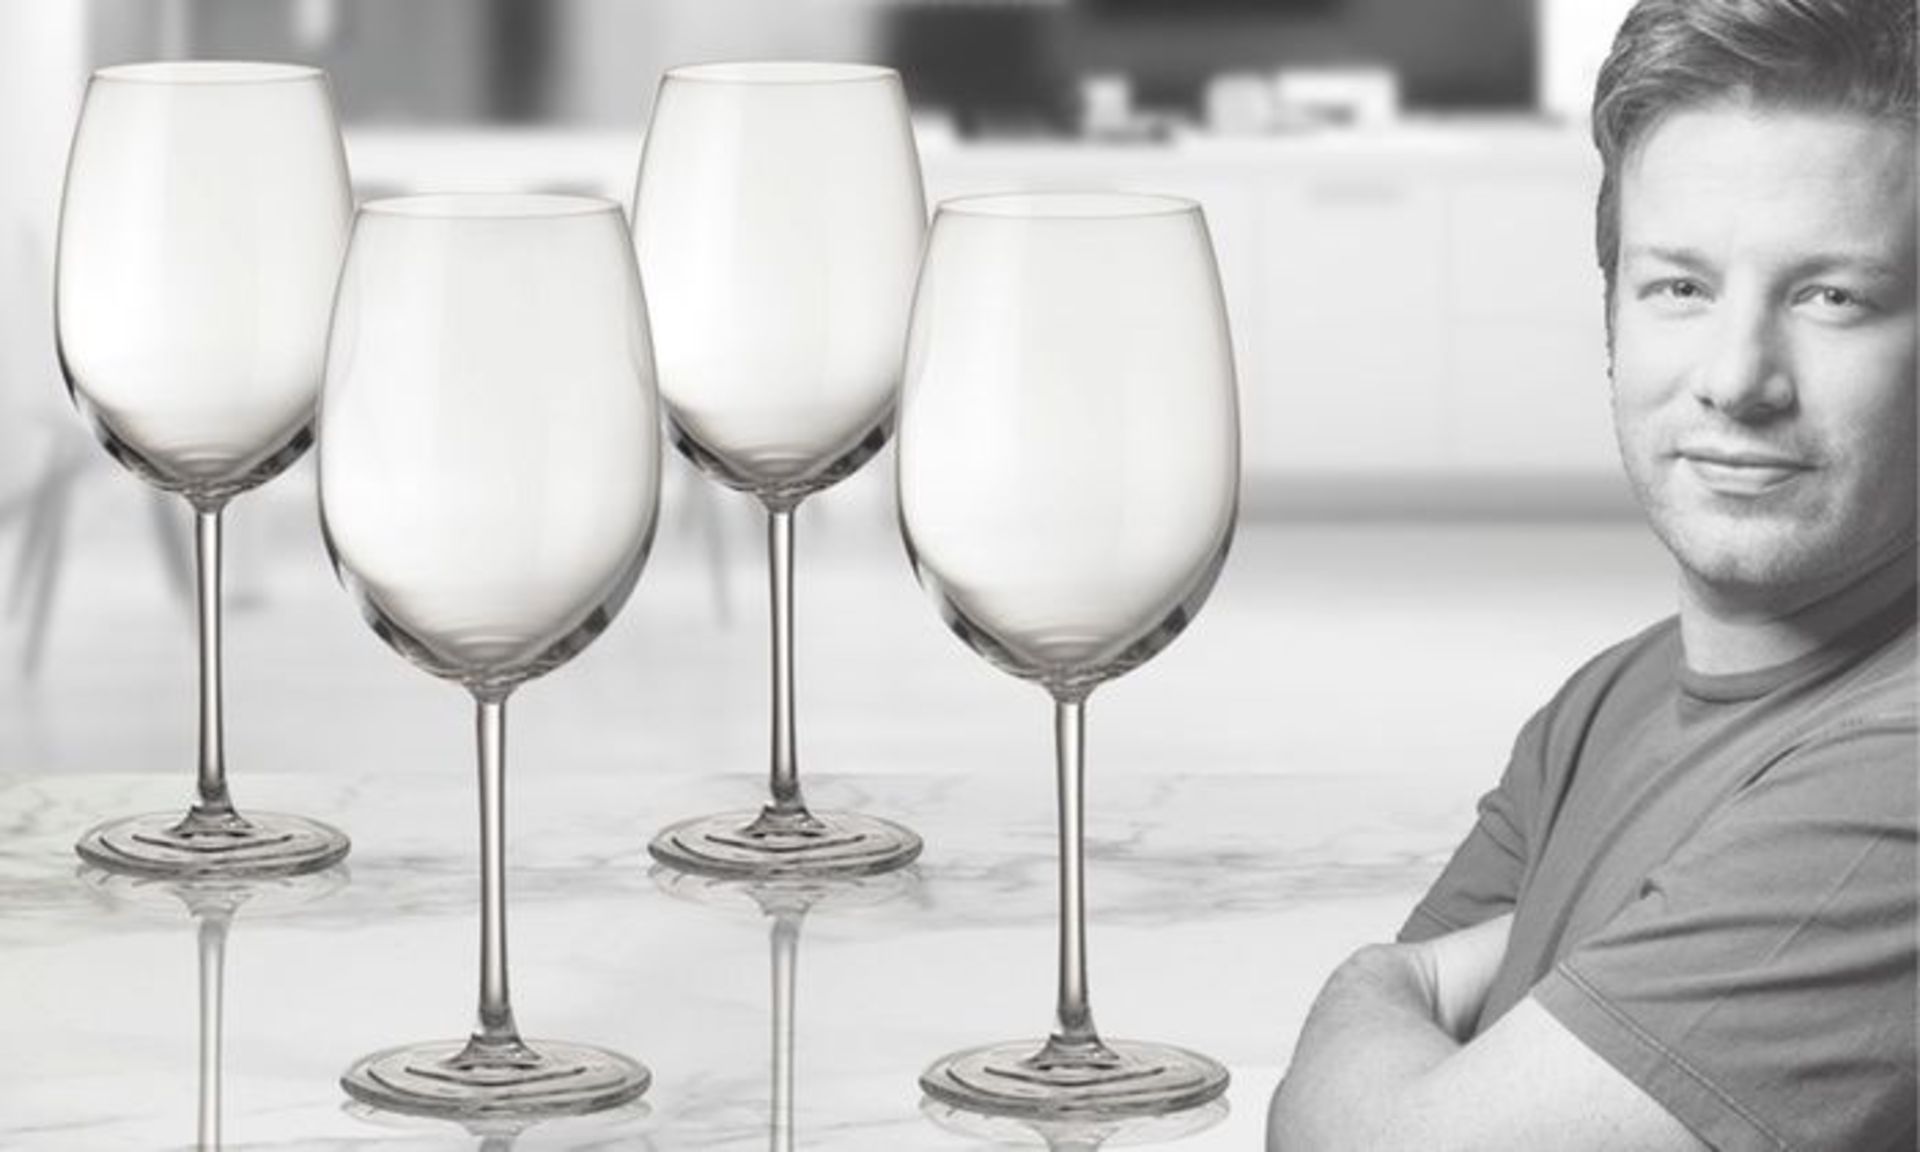 + VAT Brand New Jamie Oliver Set of Four Crystalline Wine Glasses 580ml - eBay Price £24.99